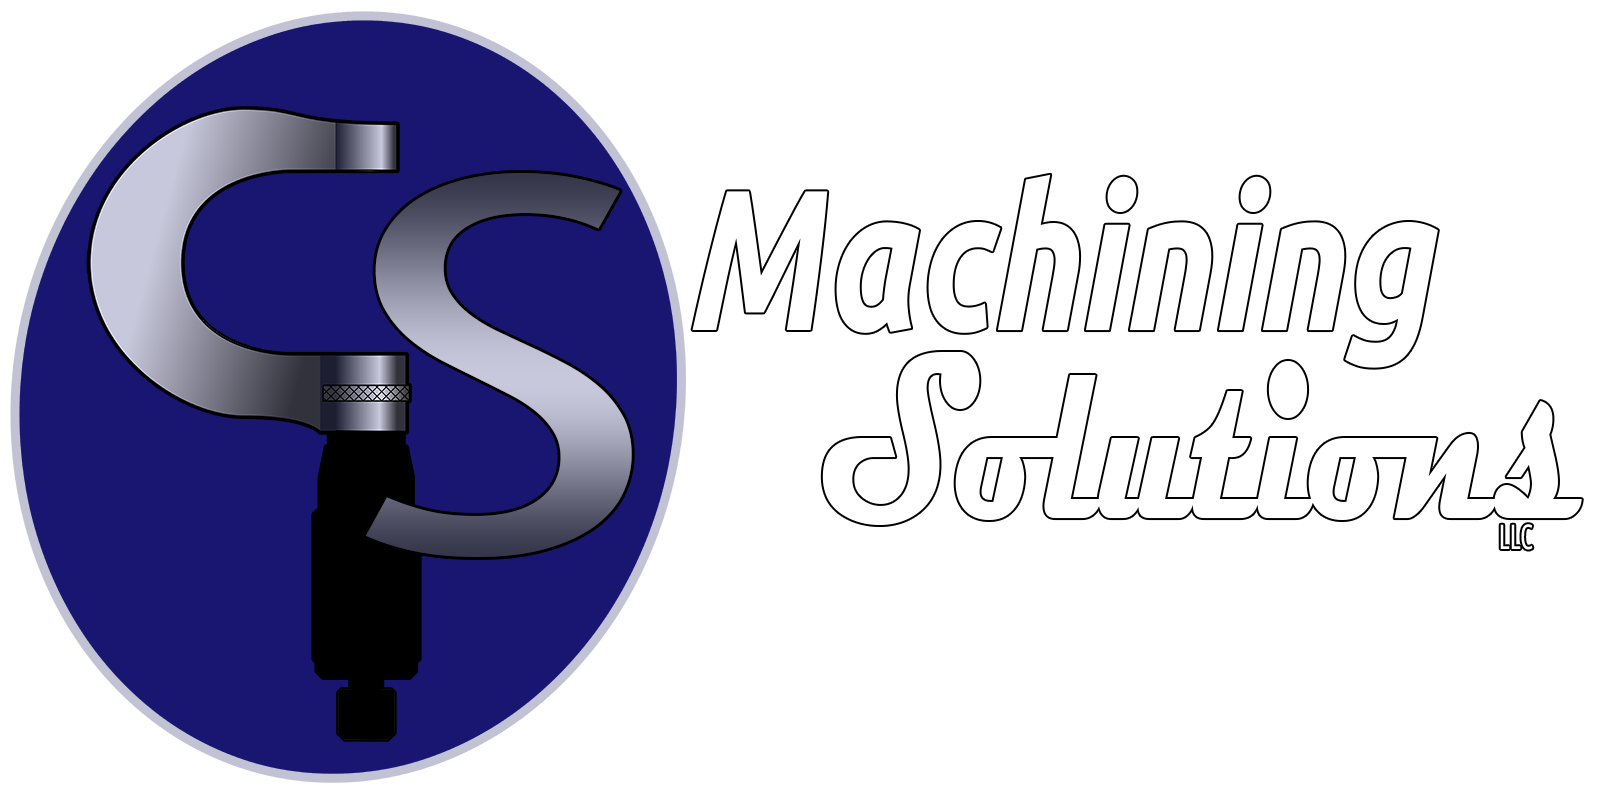 CS Machining Solutions